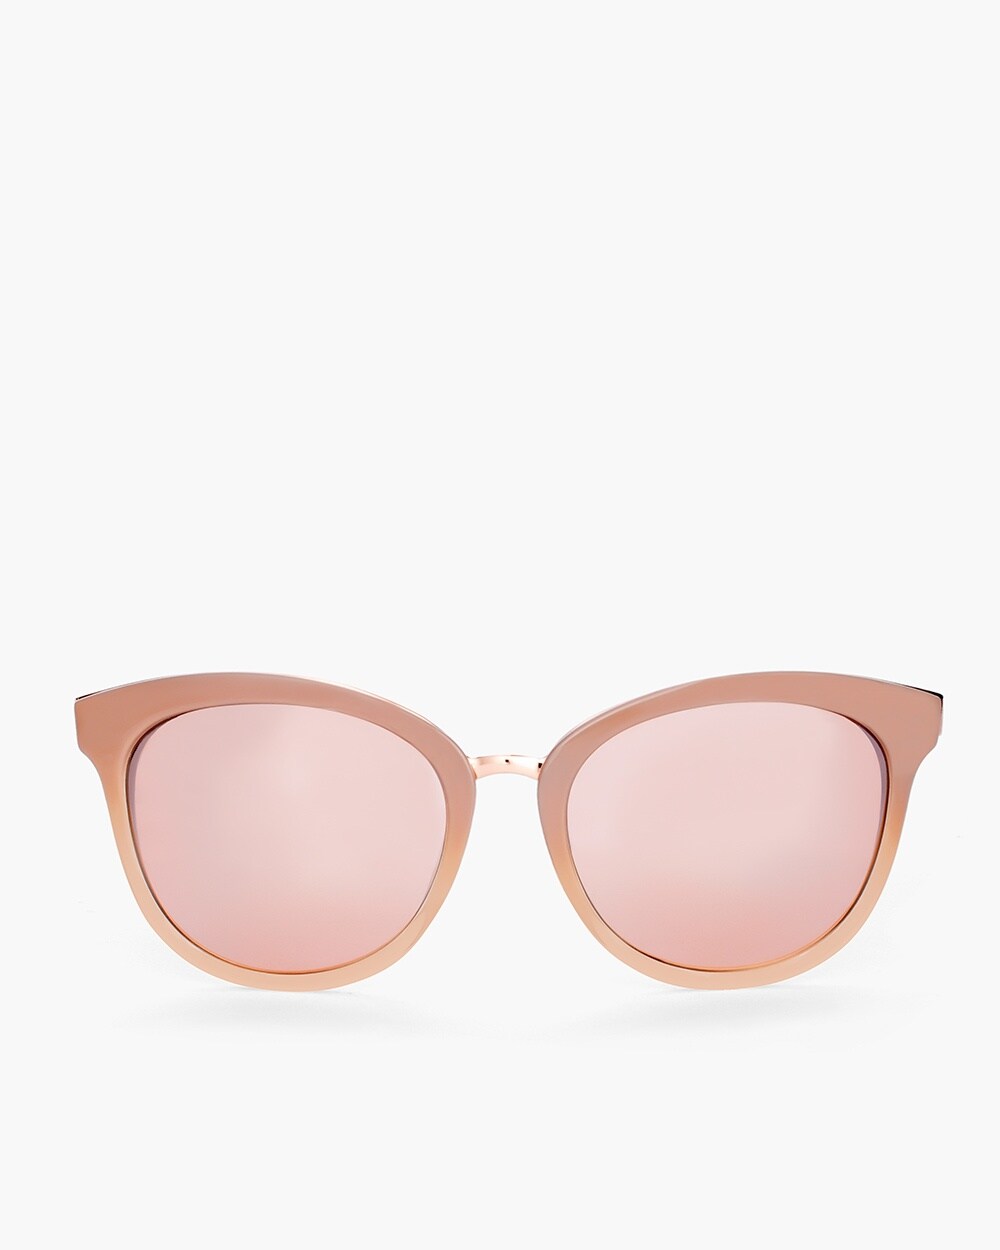 Retro Blush Sunglasses